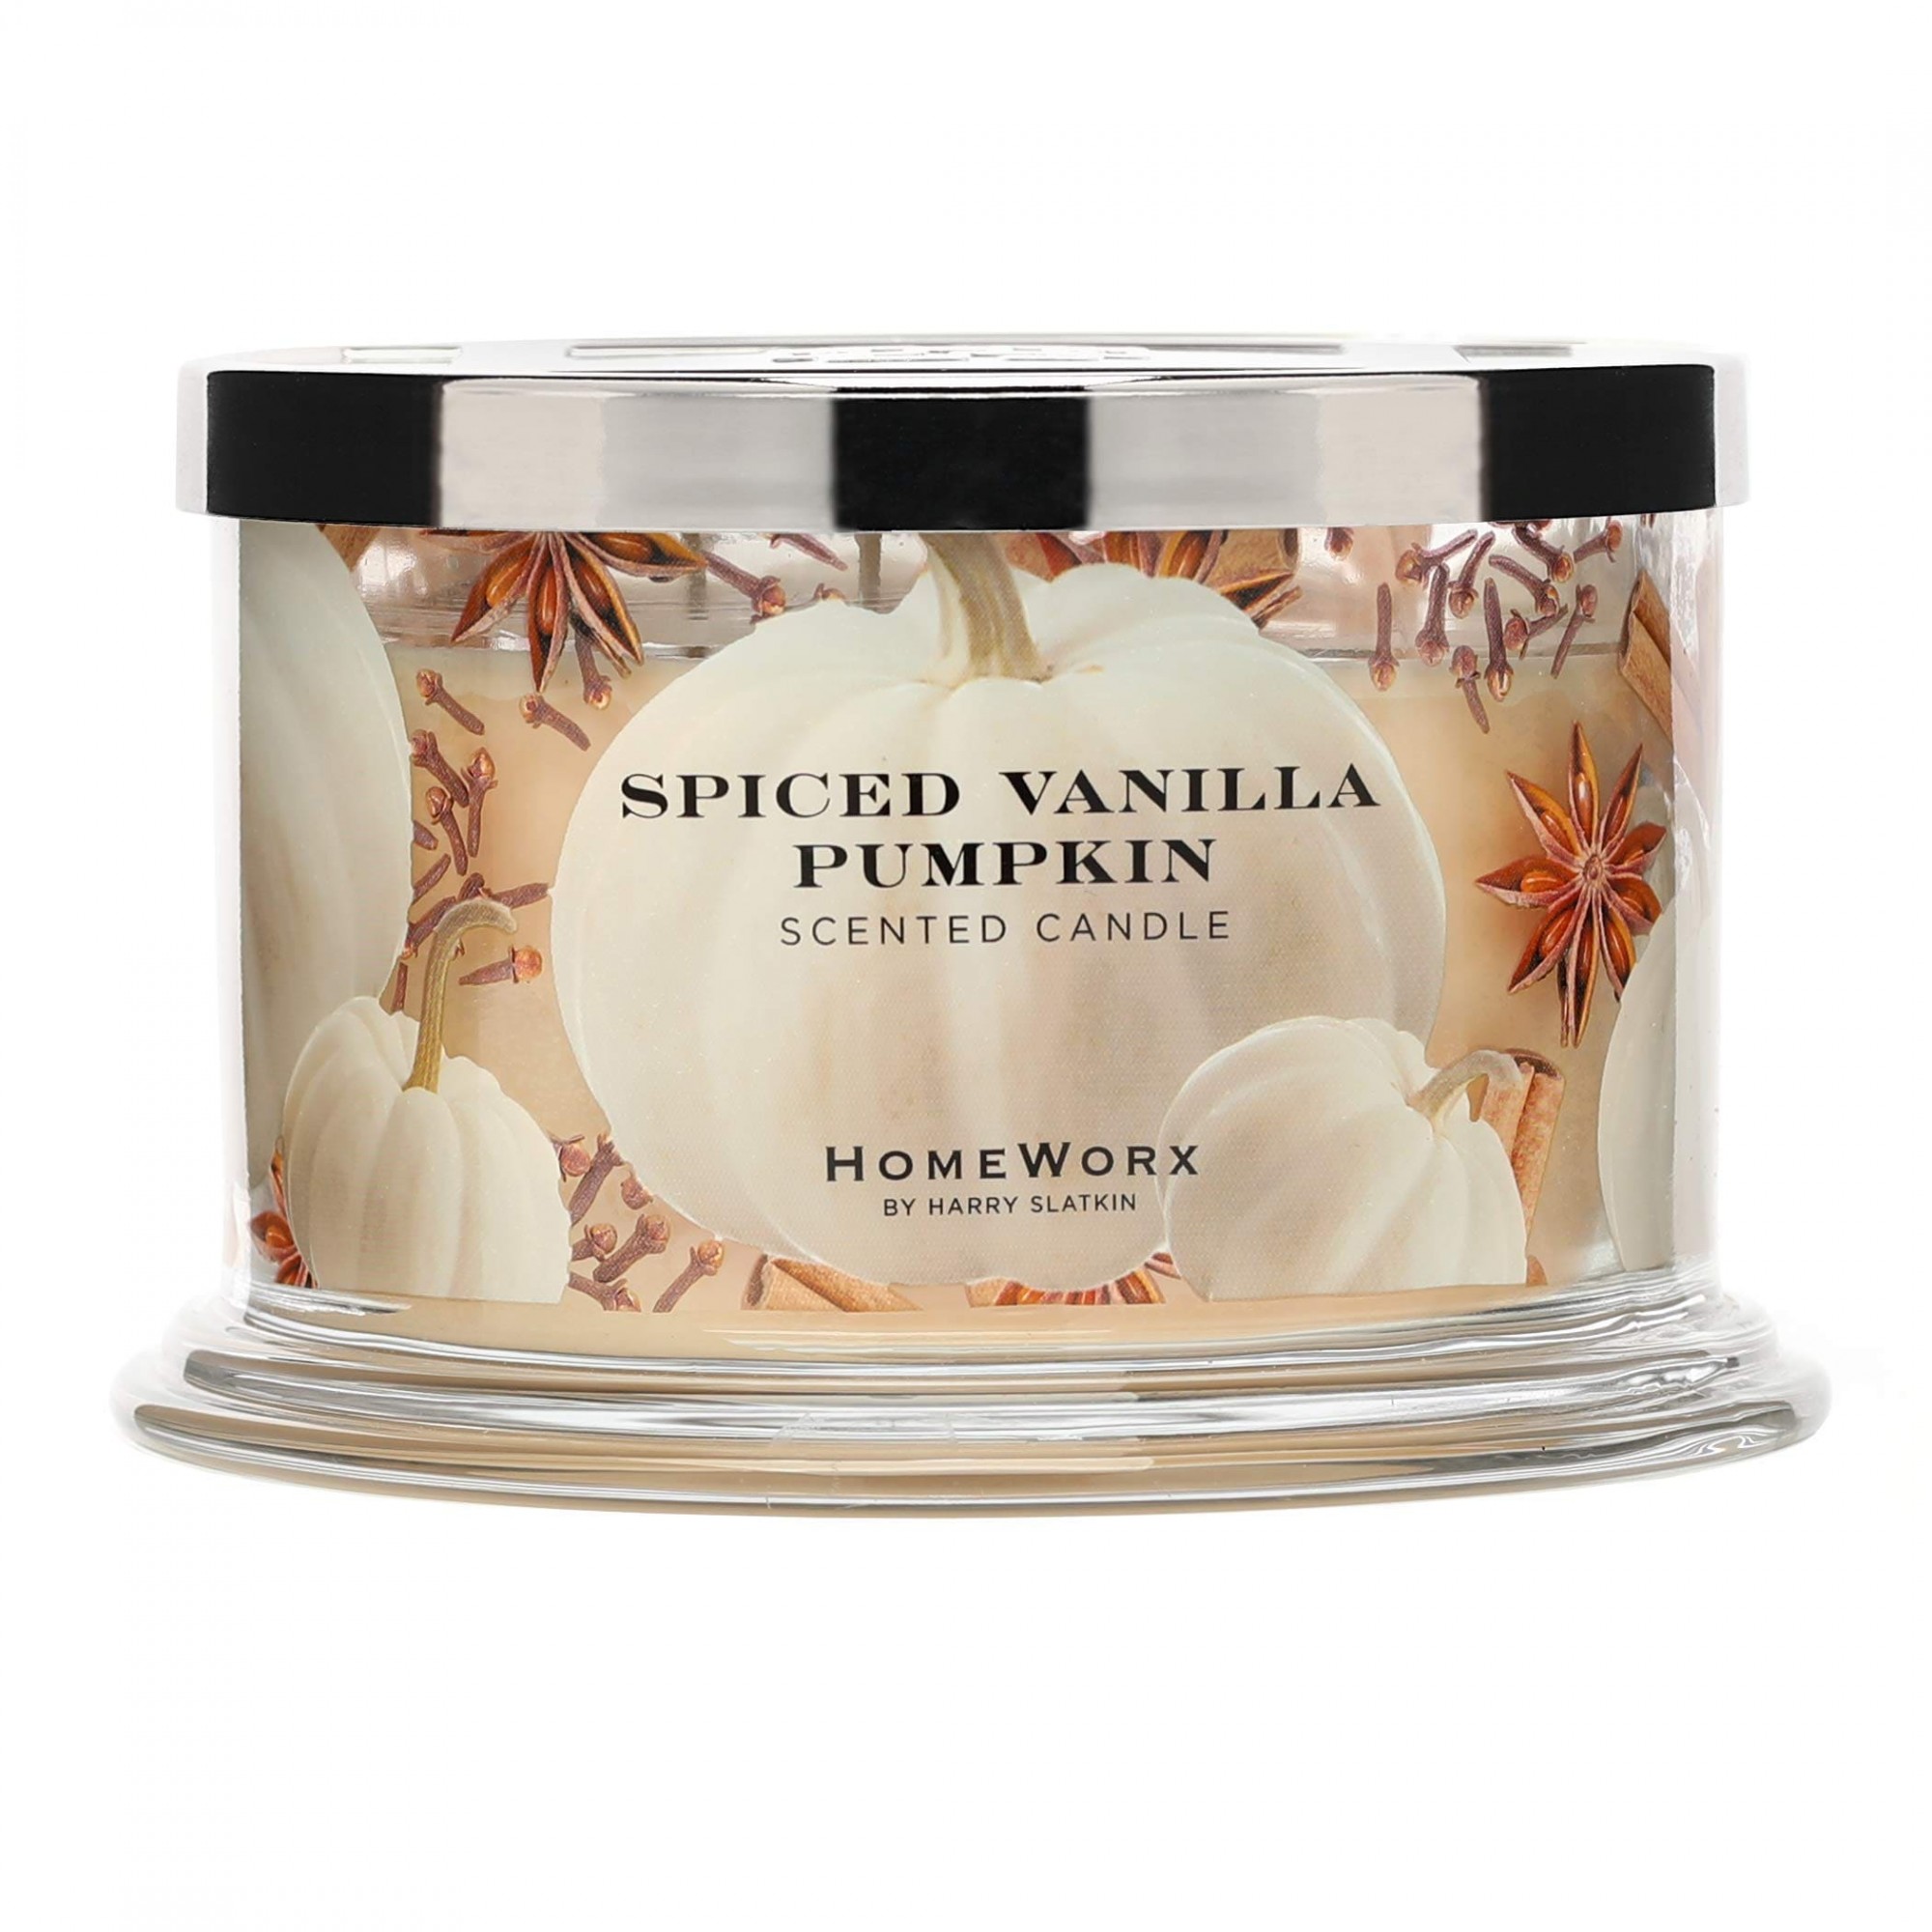 Homeworx by Harry Slatkin Spiced Vanilla Pumpkin 4 Wick Candle